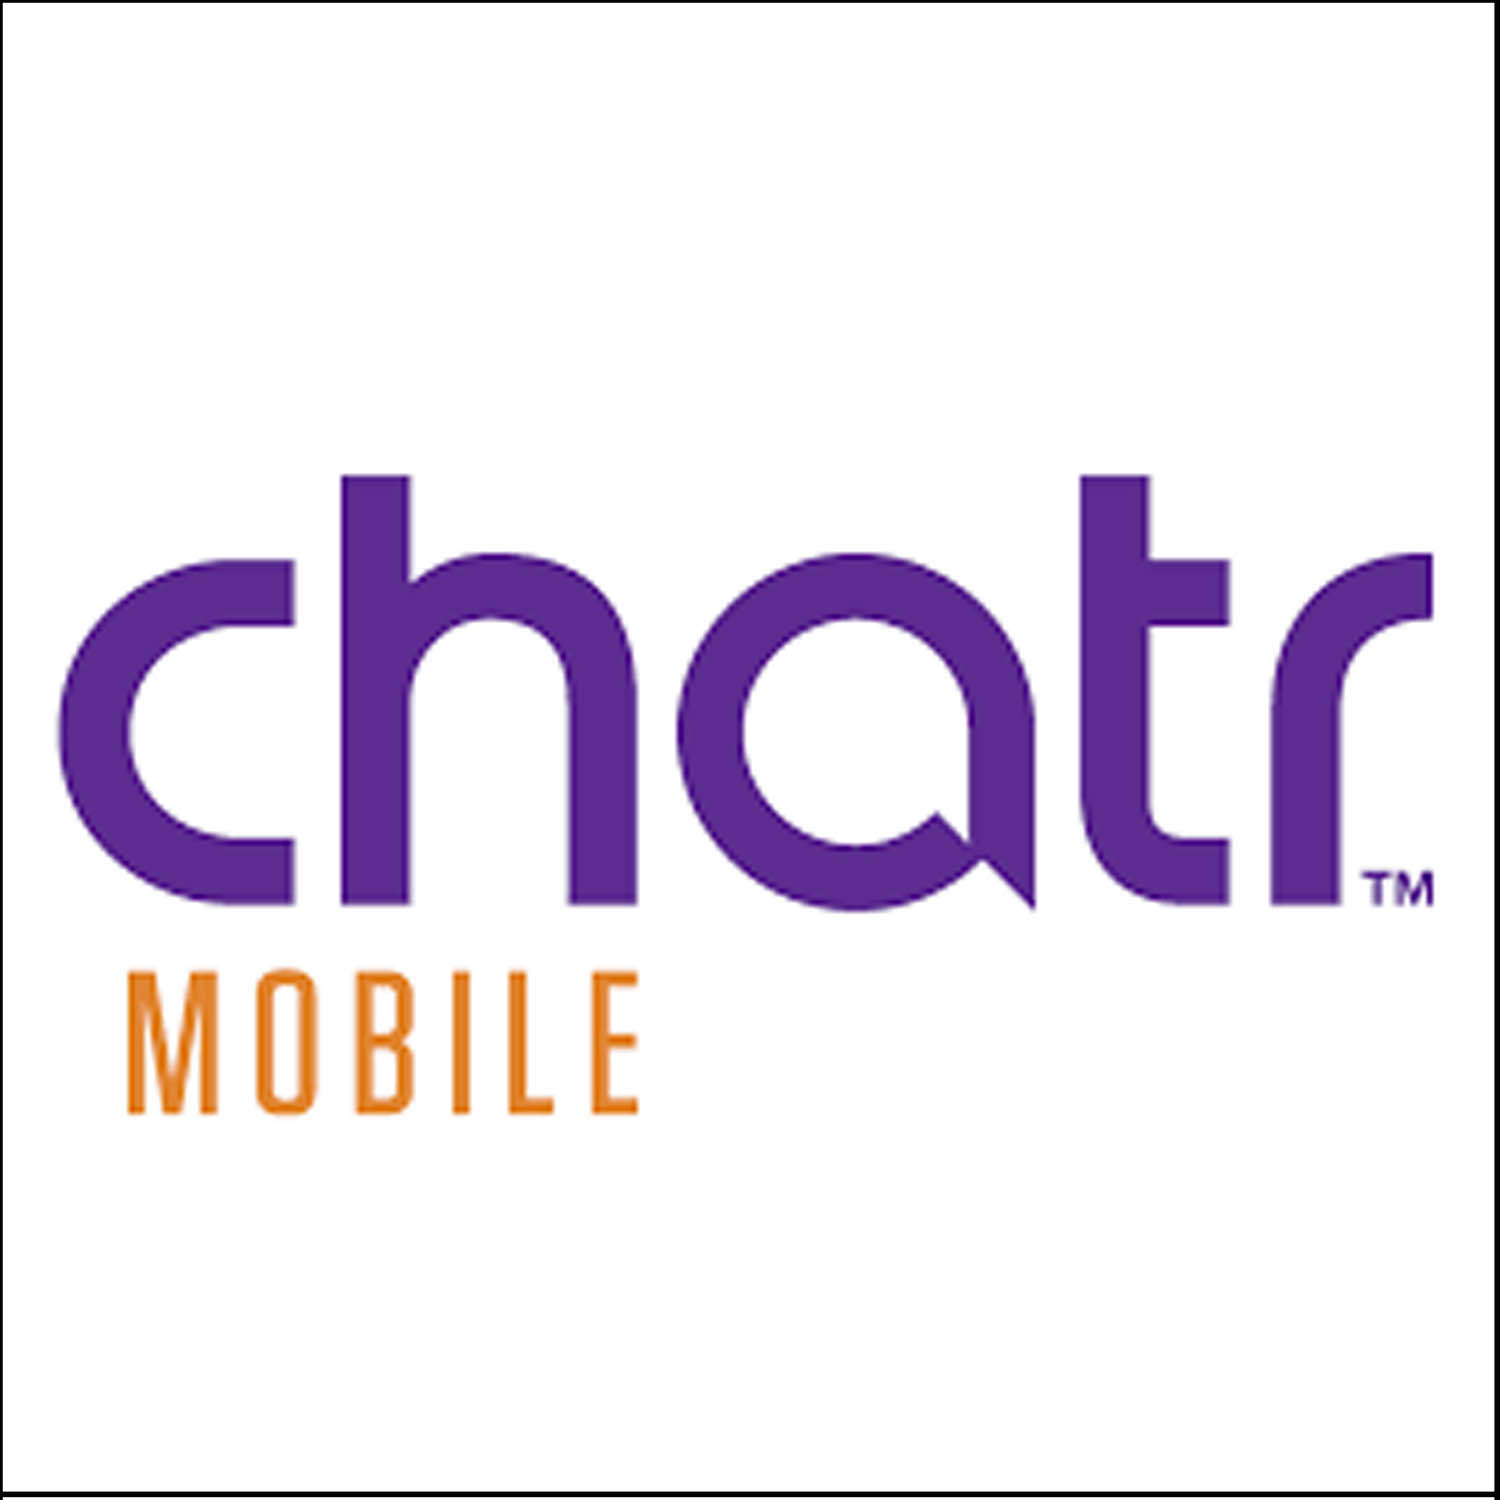 Chatr Mobile